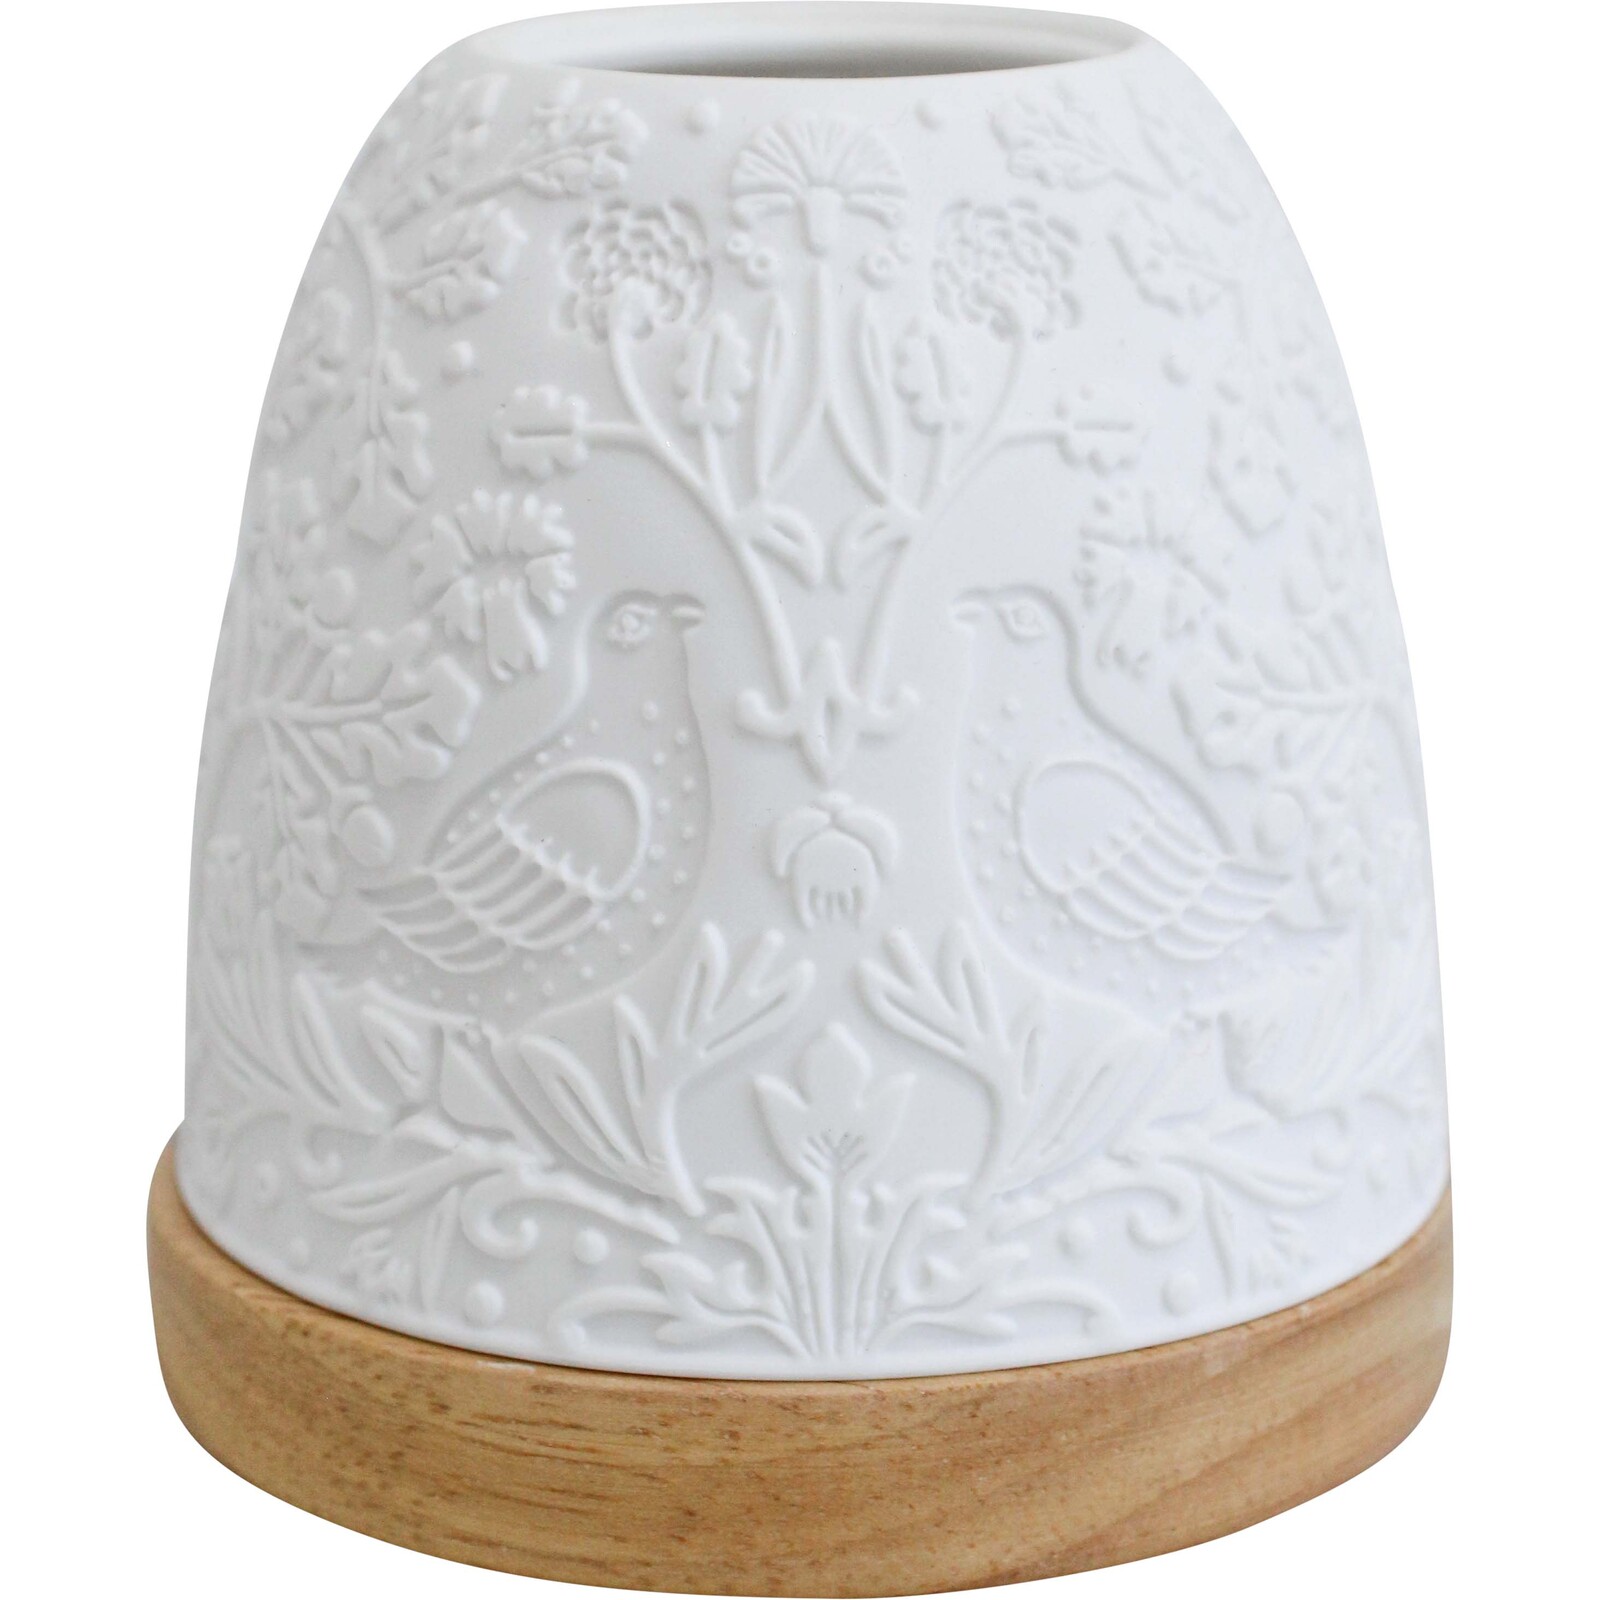 Porcelain Tealight Holder William Morris